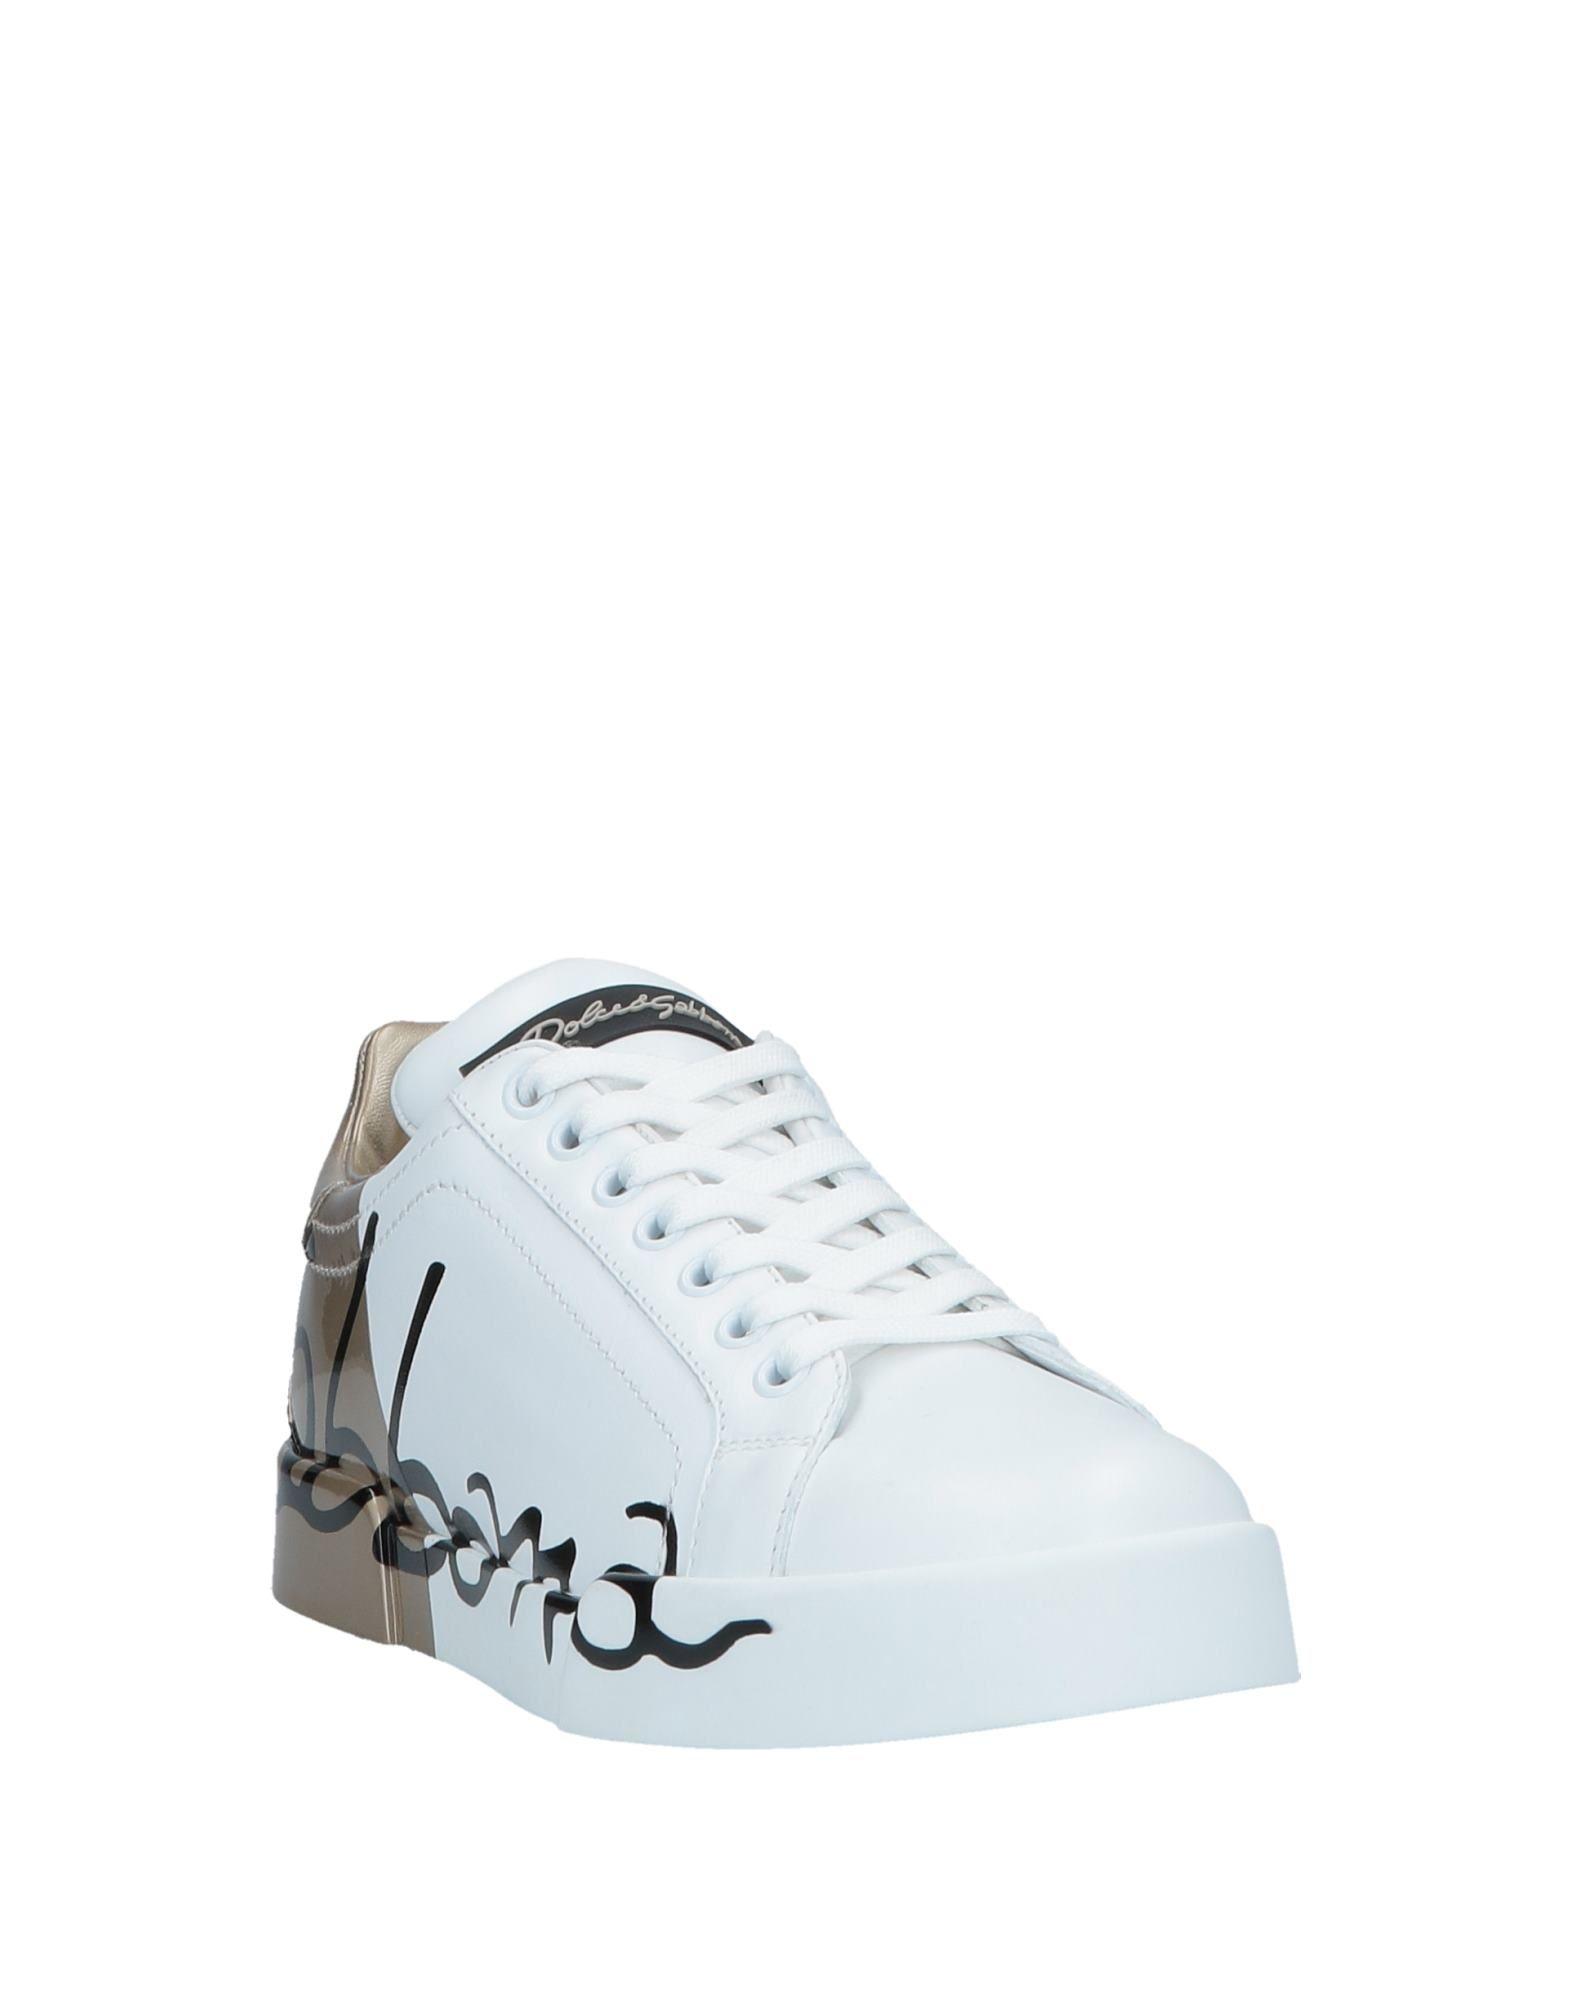 Dolce & Gabbana White And Gold Leather Portofino Sneakers in 